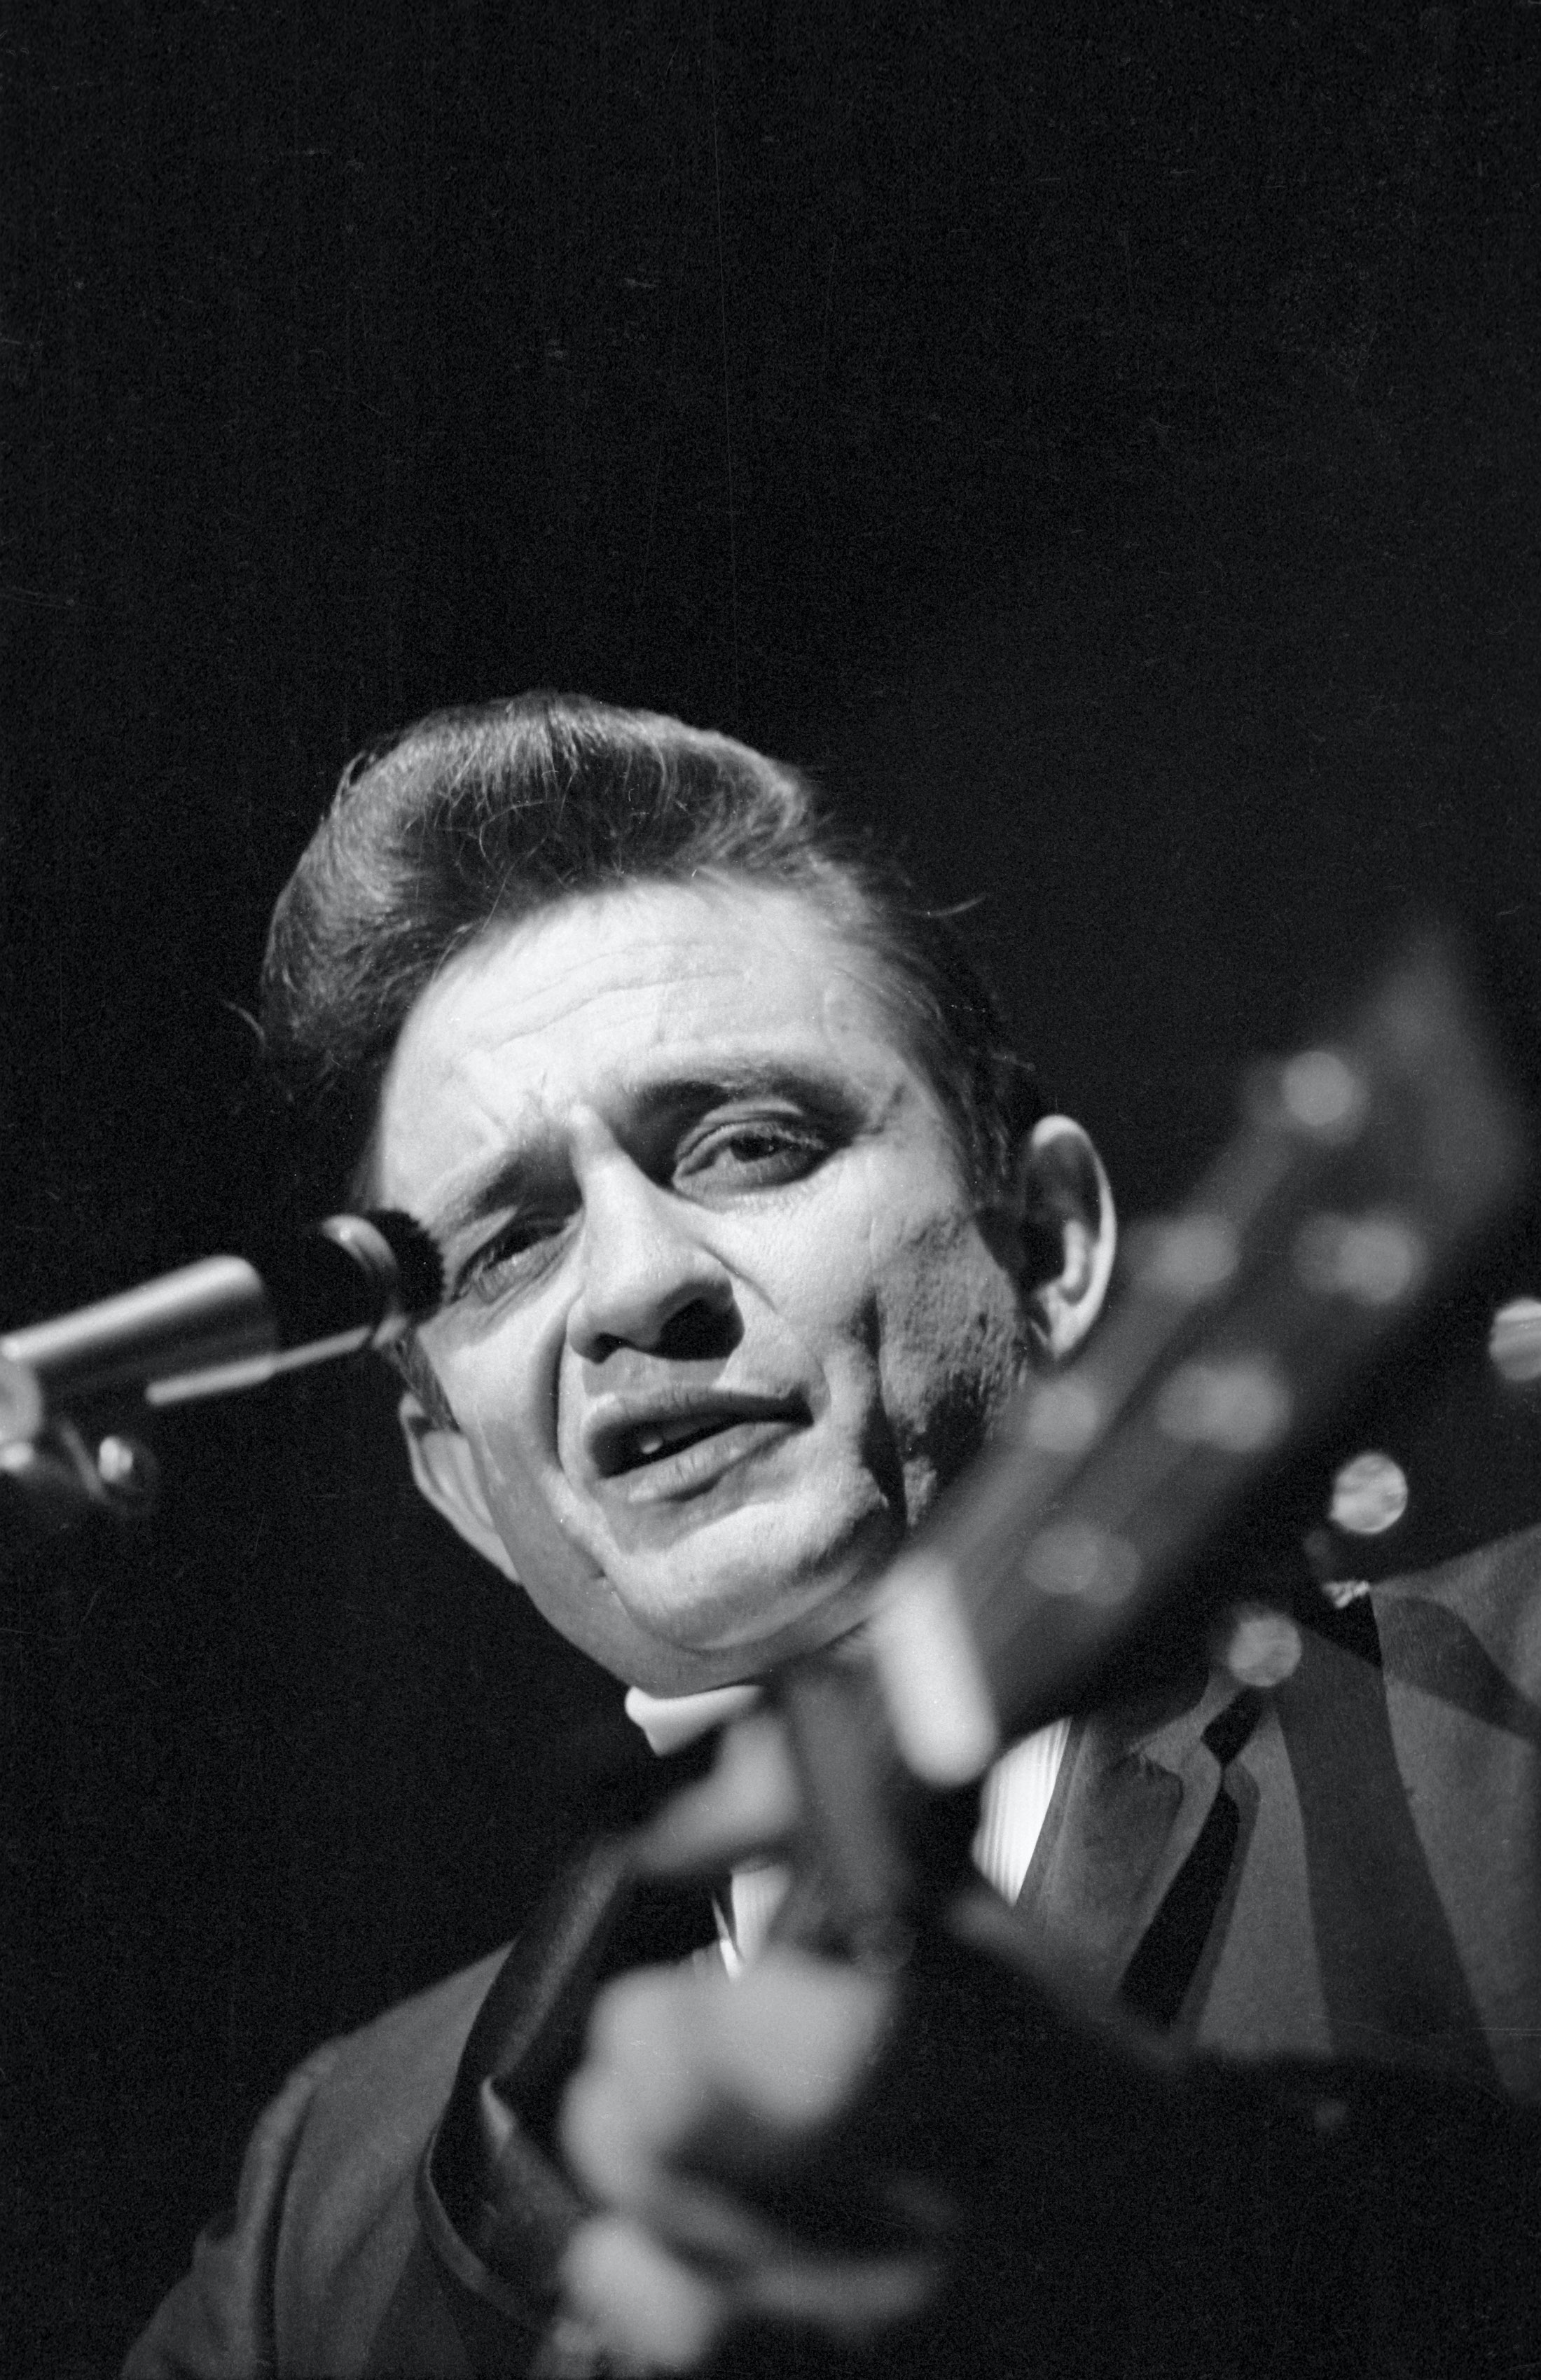 Johnny Cash Circa 1968 | Courtesy of The John R Cash Trust